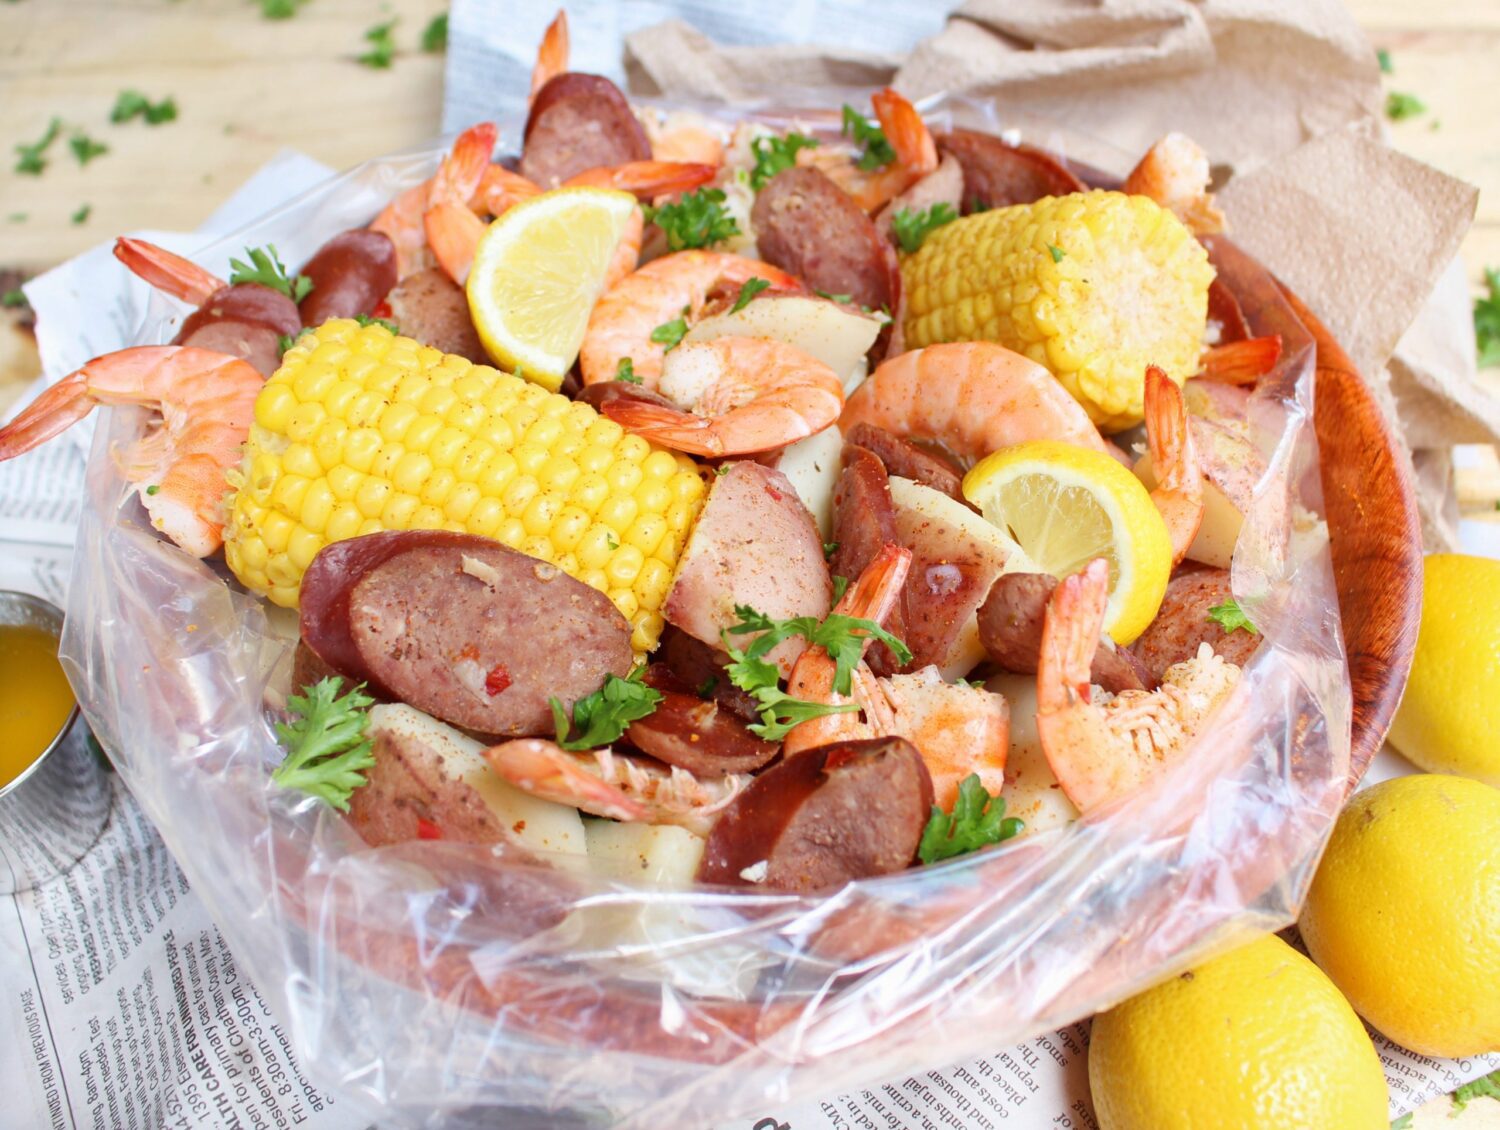 Seafood boil containing corn on the cob, sausage, shrimp and lemon